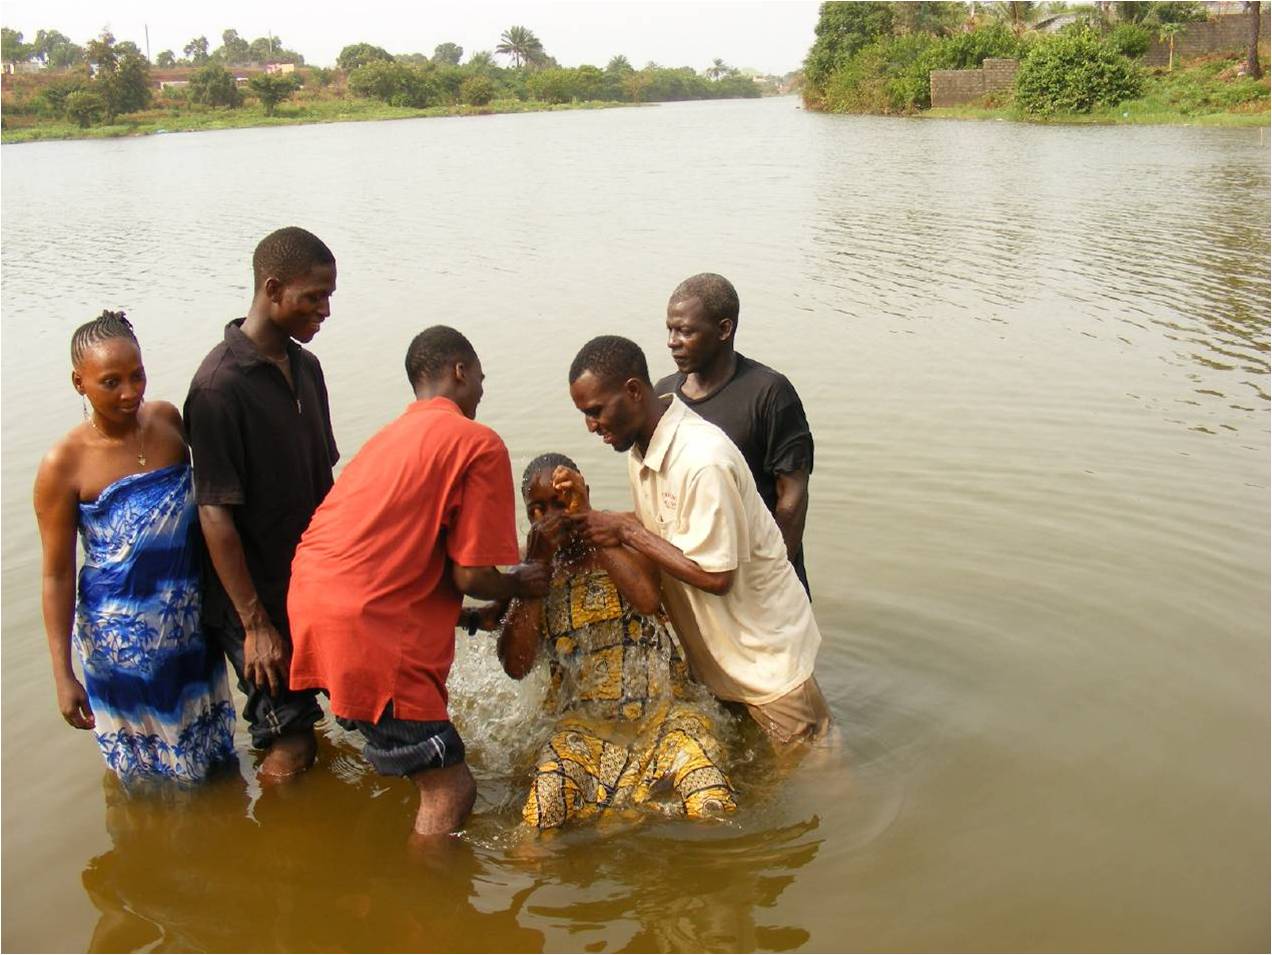 Baptizing in Guinea